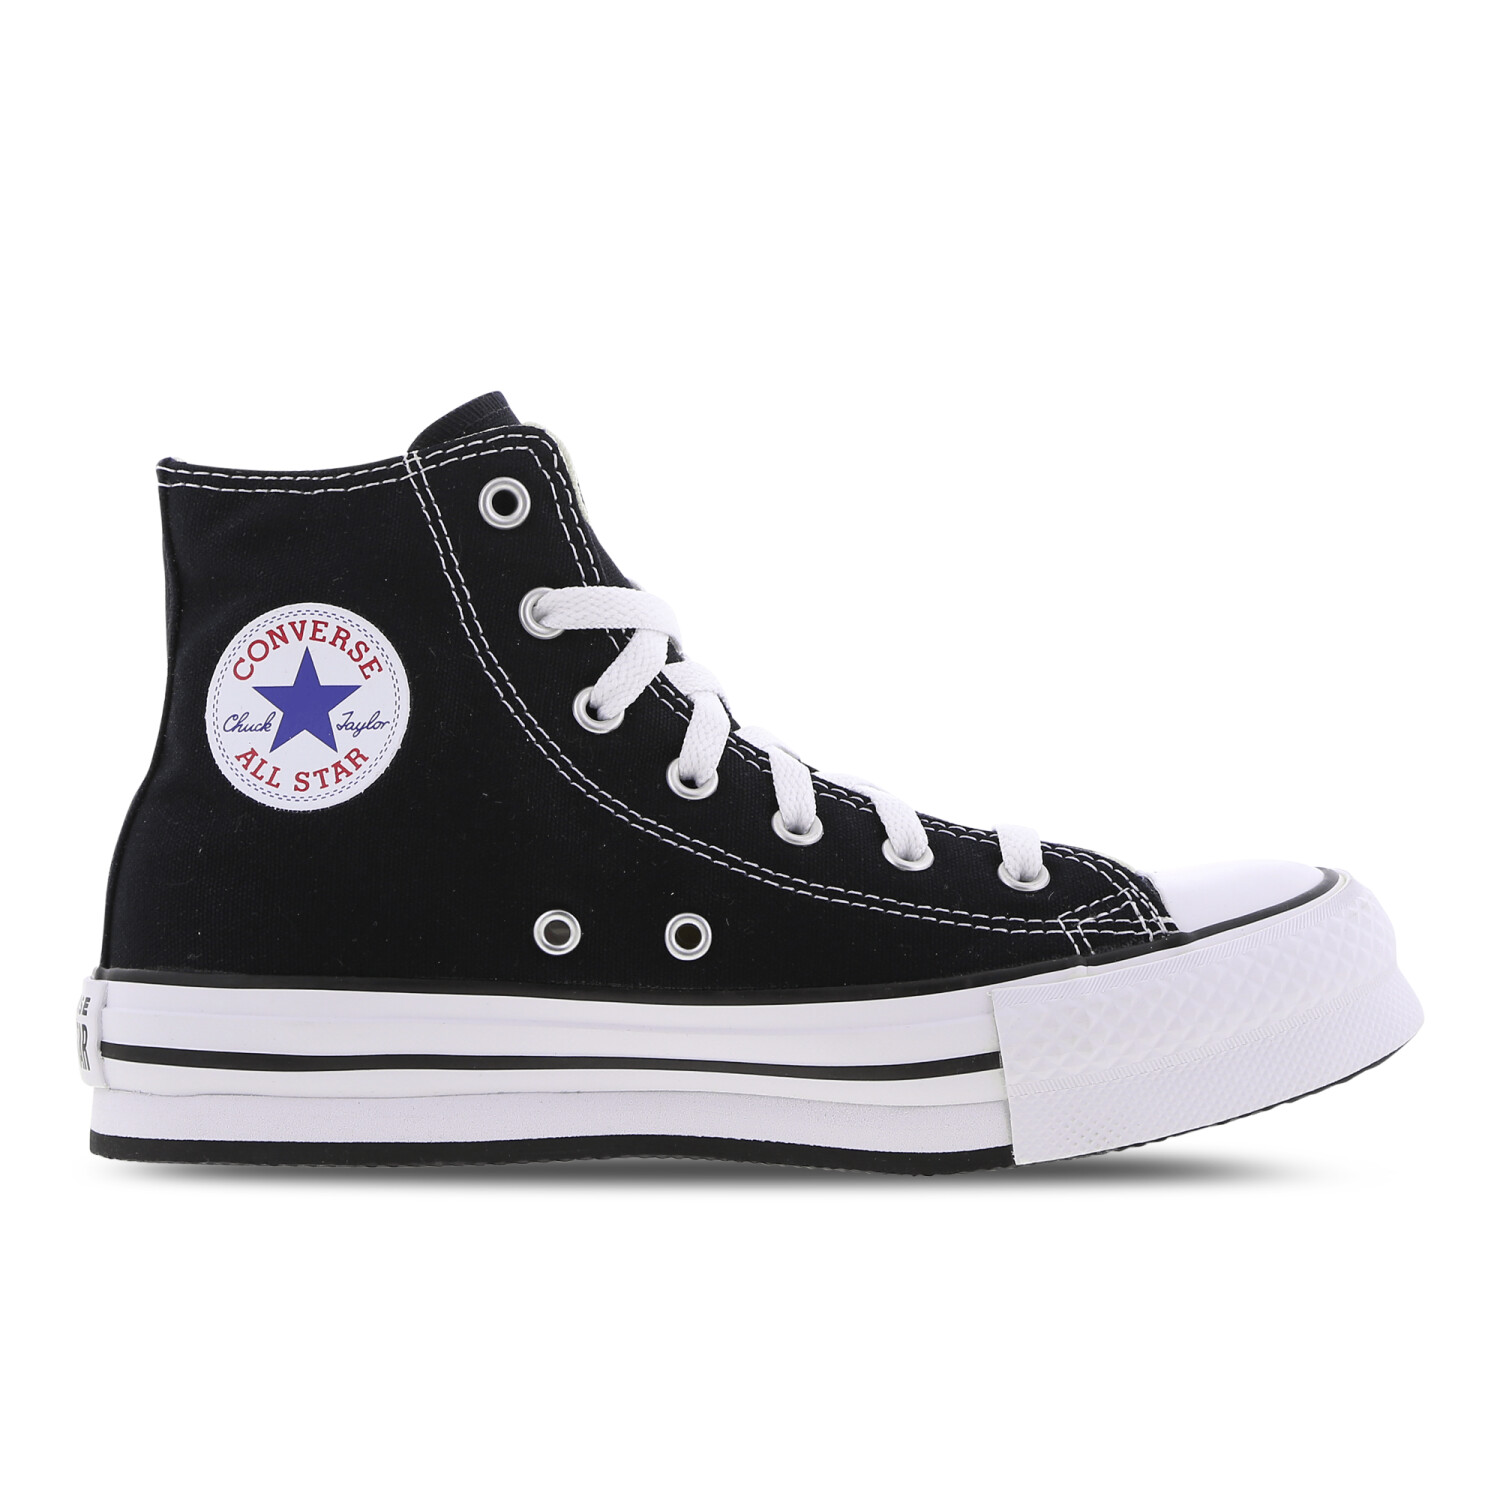 Converse Chuck Taylor All Star Eva Lift Kids black/white/black ab 59,99 € |  Preisvergleich bei